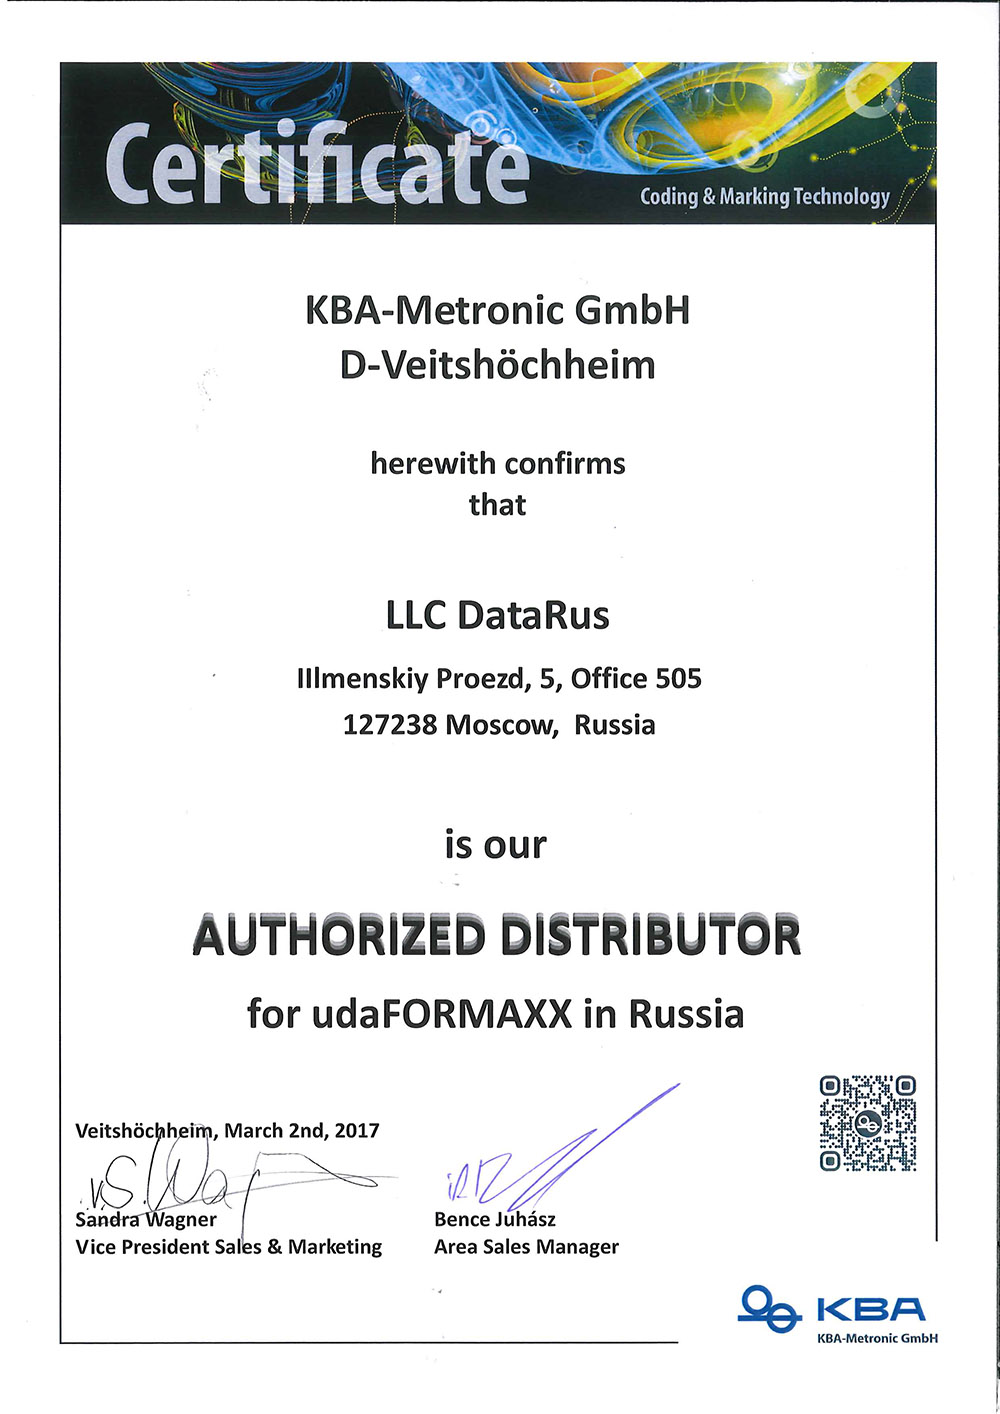 KBA certificate lines